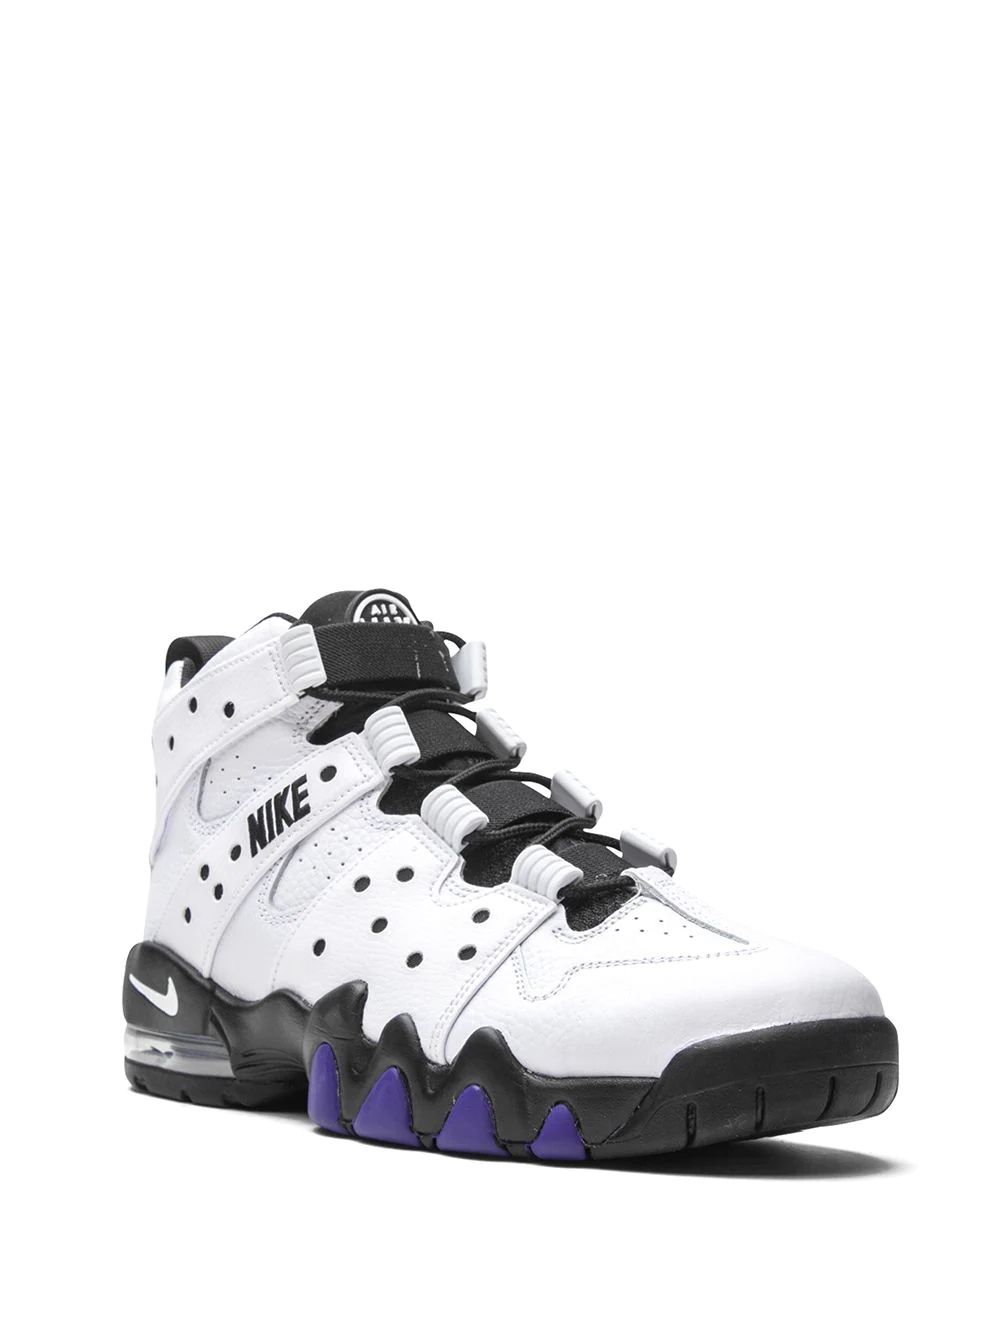 Air Max2 CB '94 "White/Varsity Purple" sneakers - 2